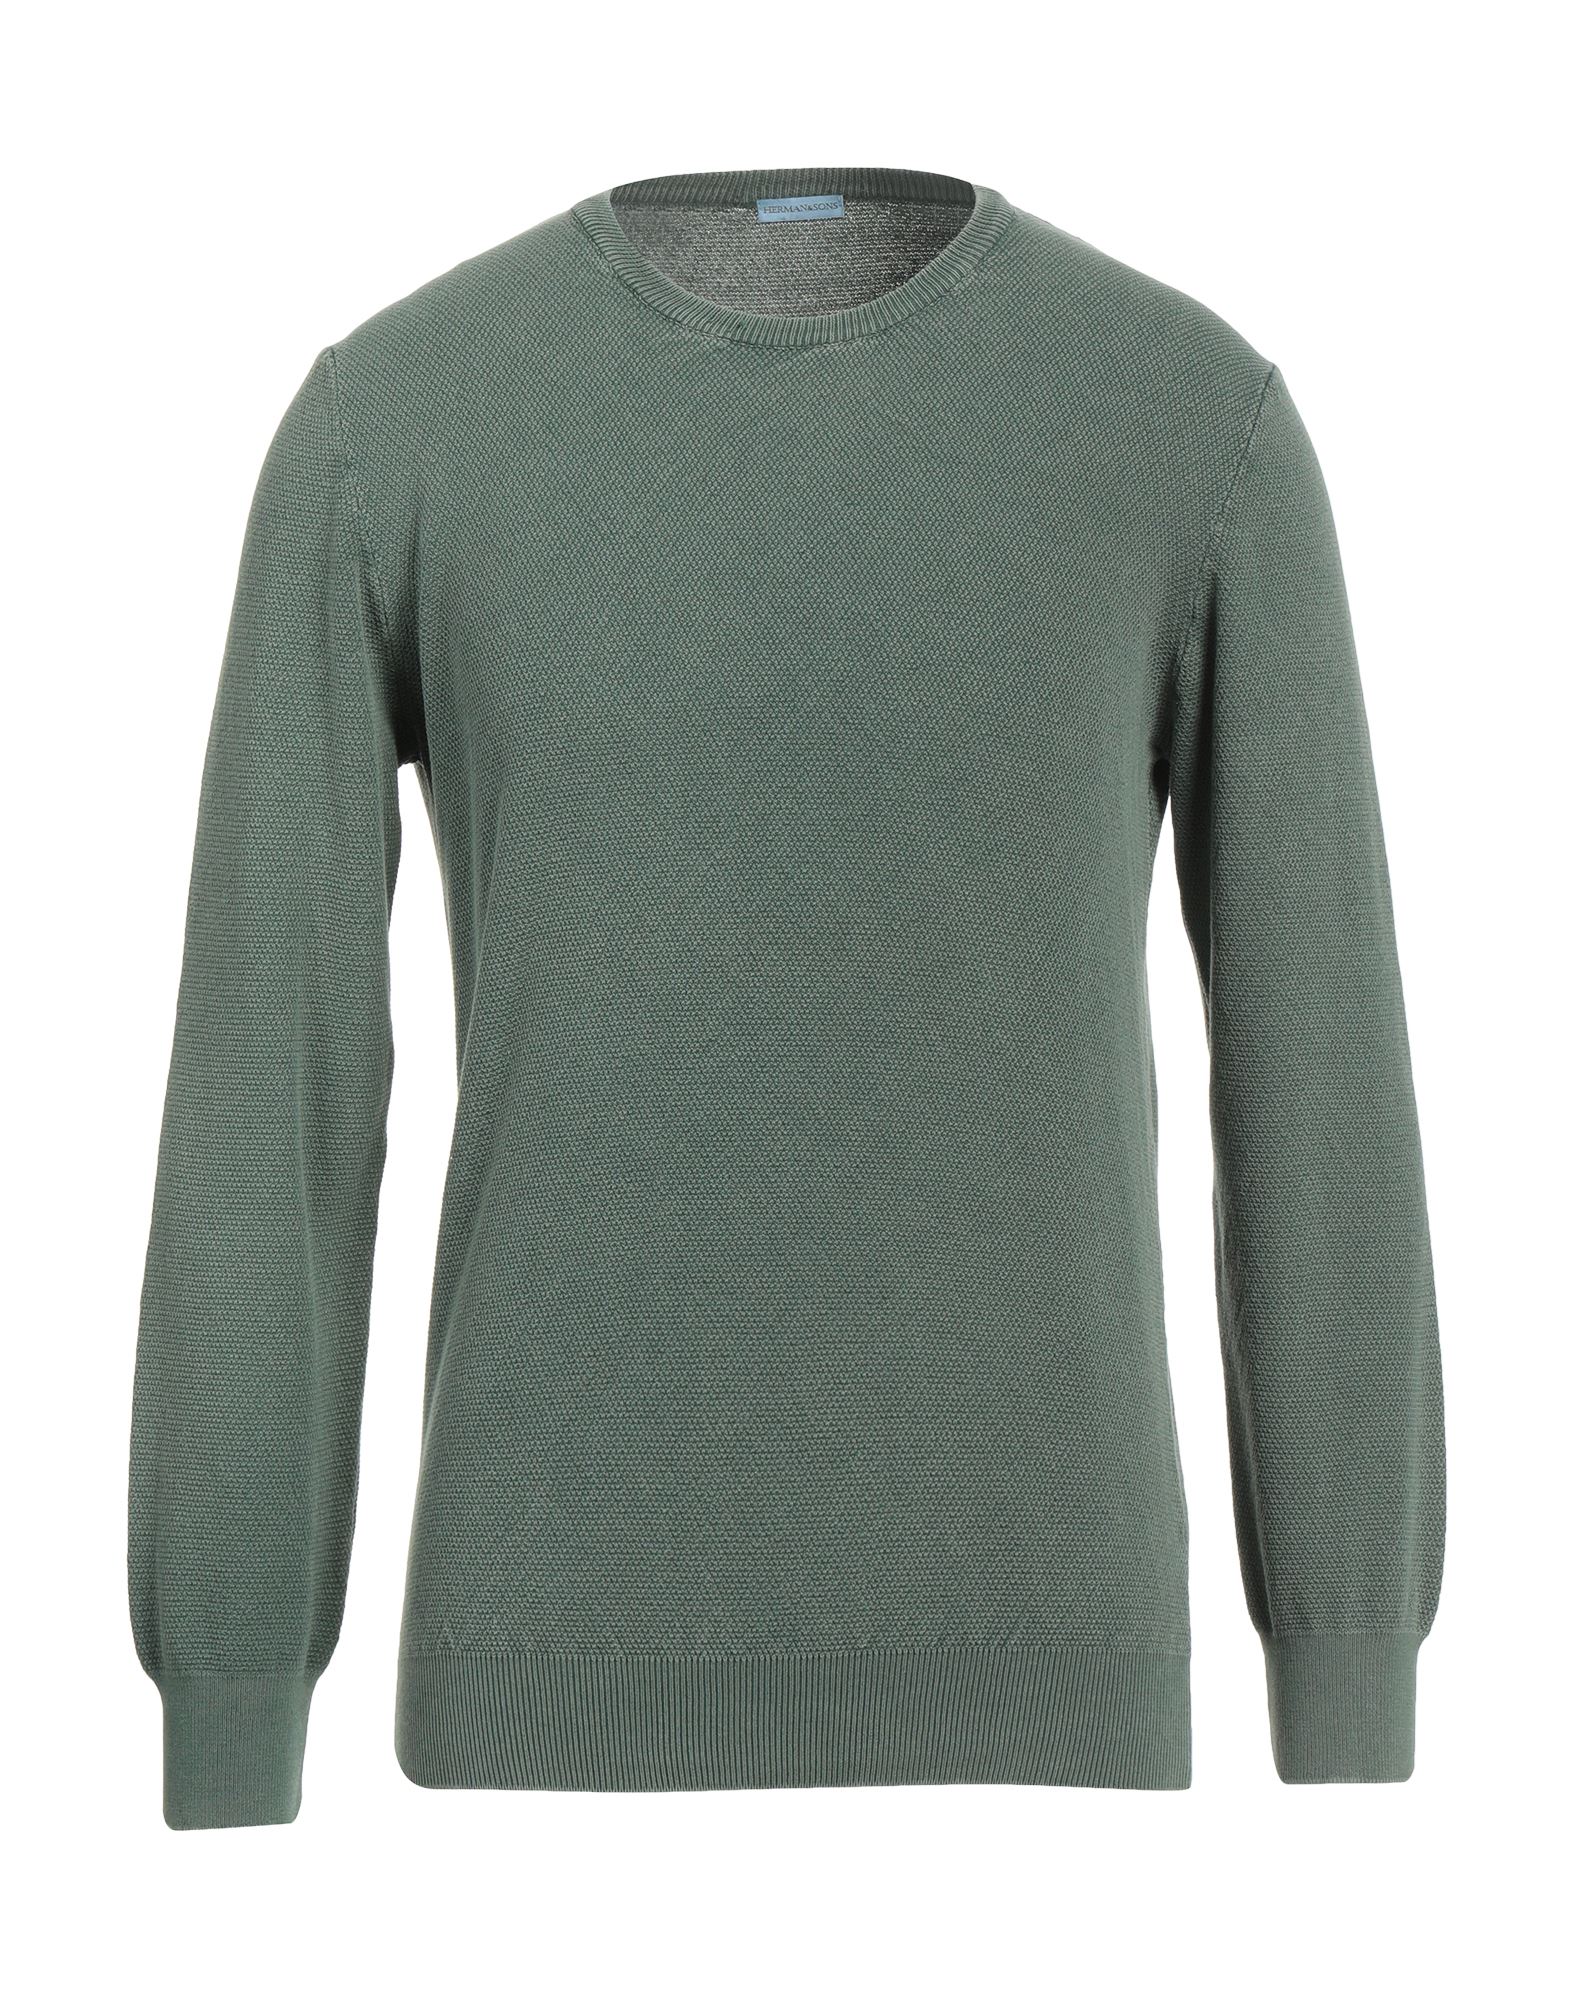 Herman & Sons Sweaters In Green